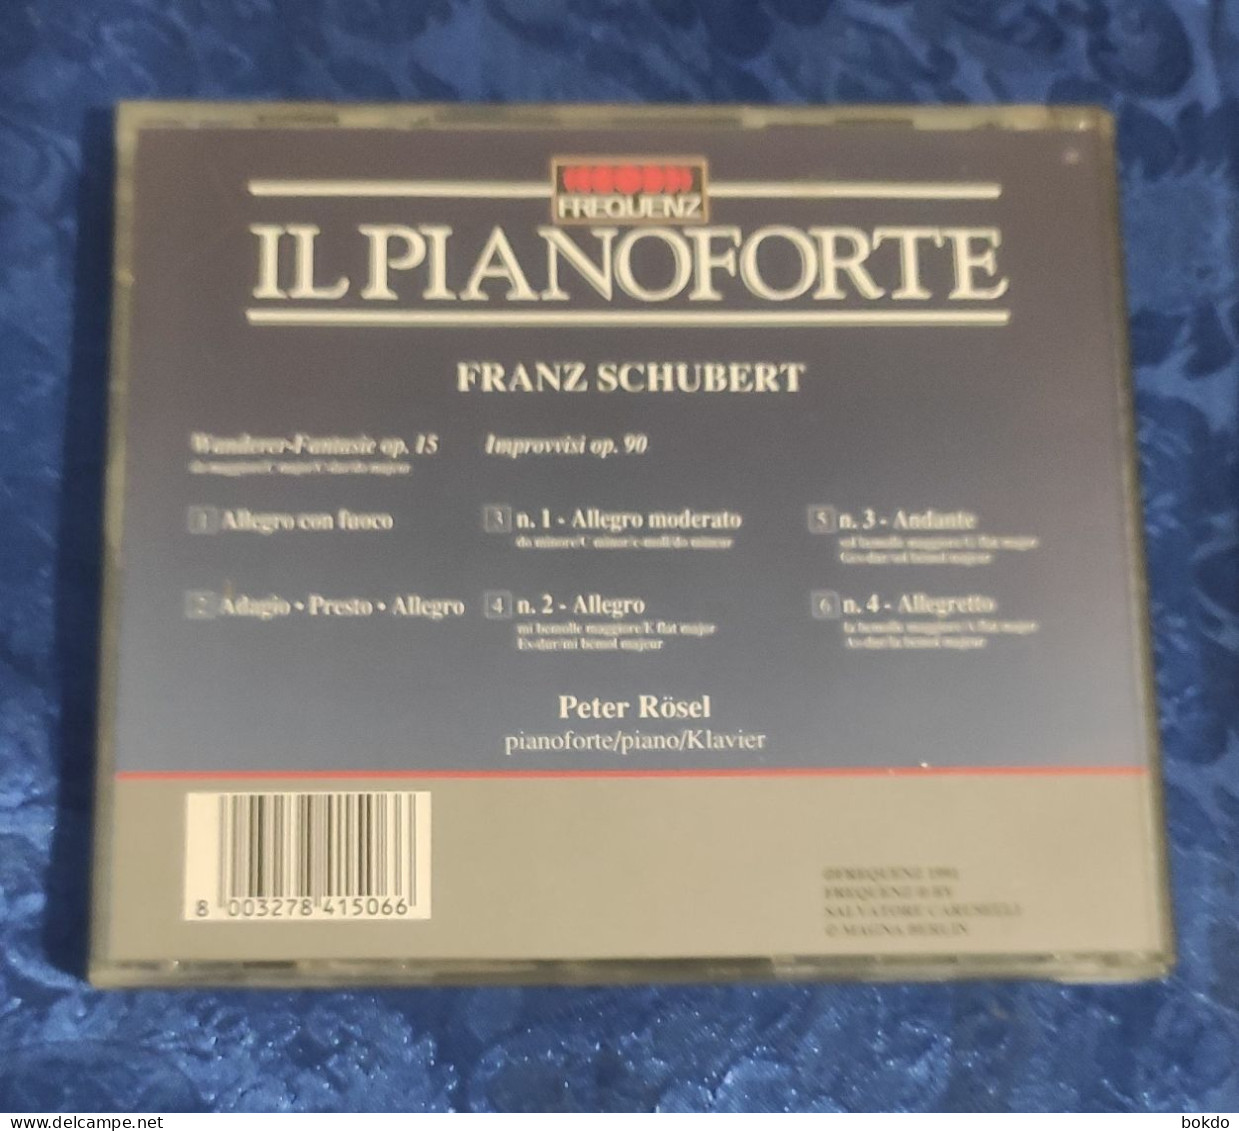 IL PIANOFORTE - Franz Schubert - Klassik